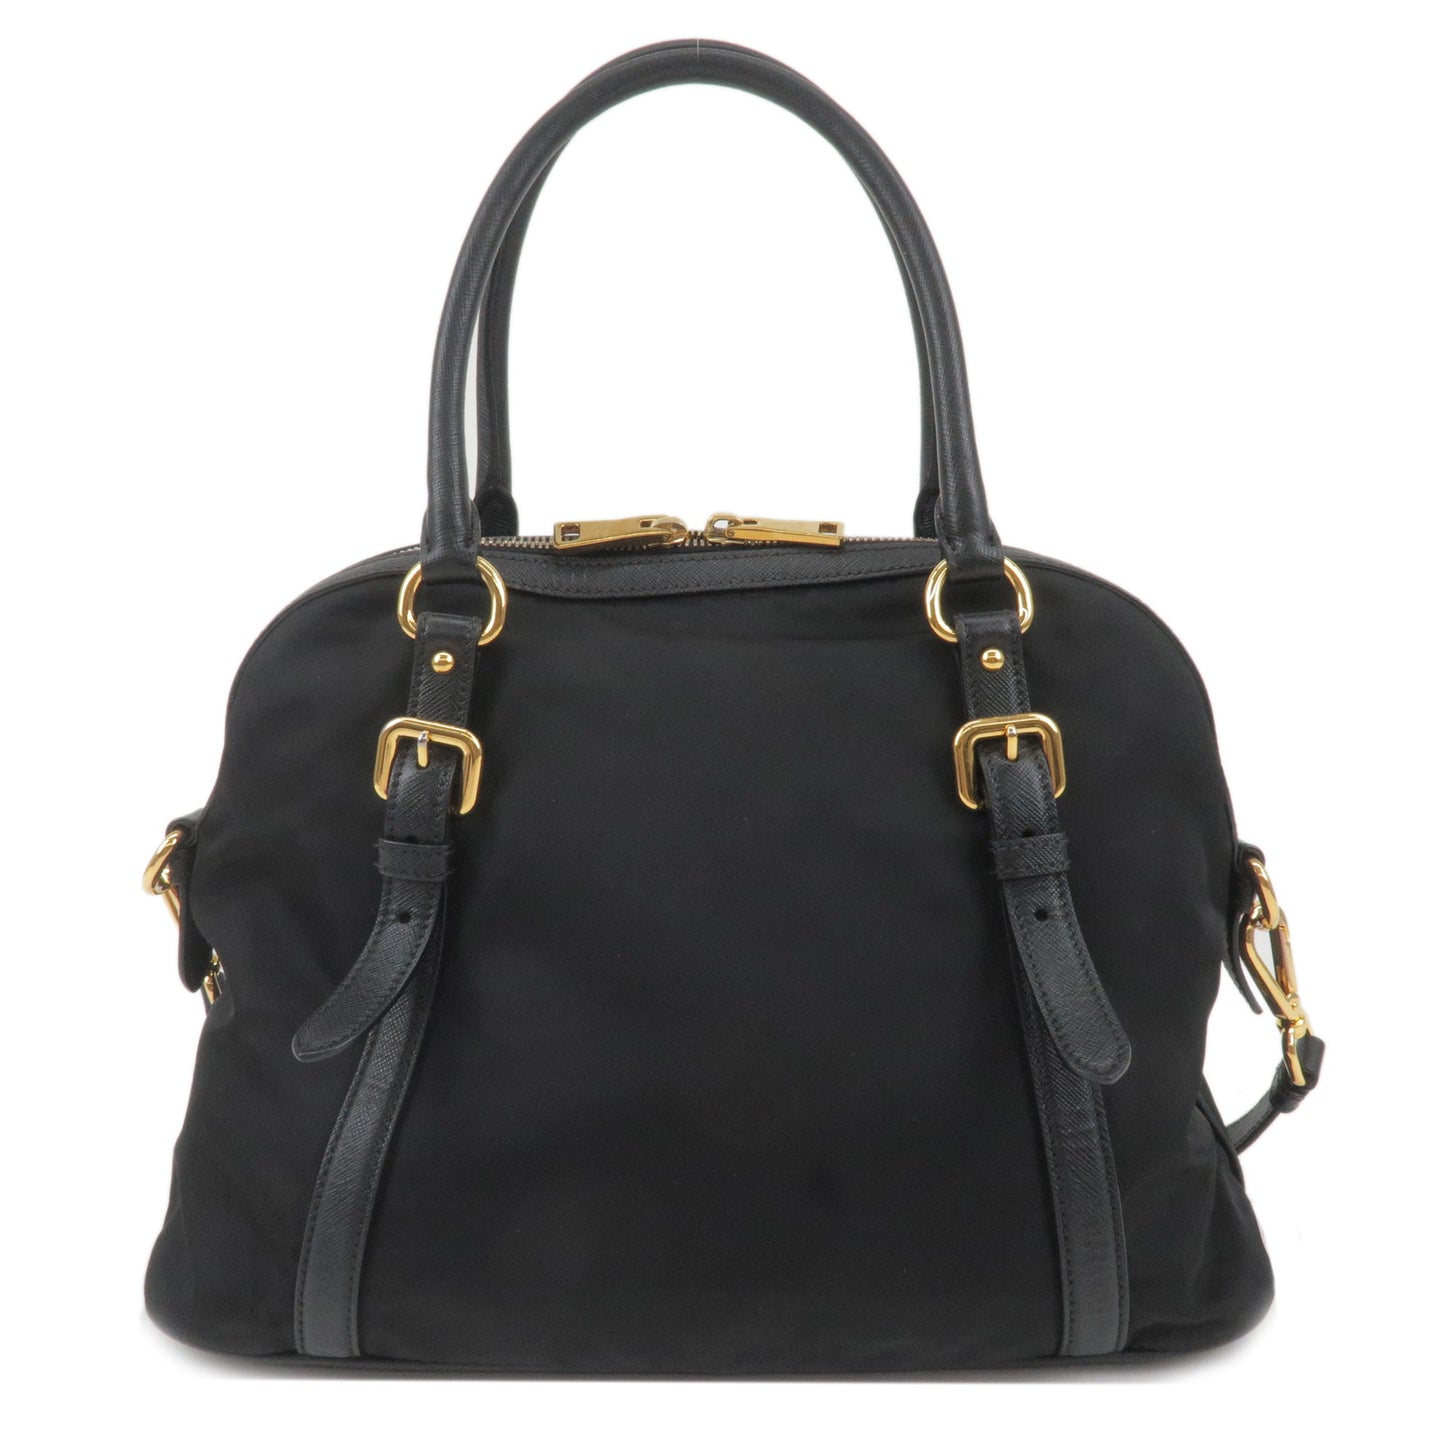 PRADA Logo Nylon Leather 2Way Bag Hand Bag Shoulder Bag Black